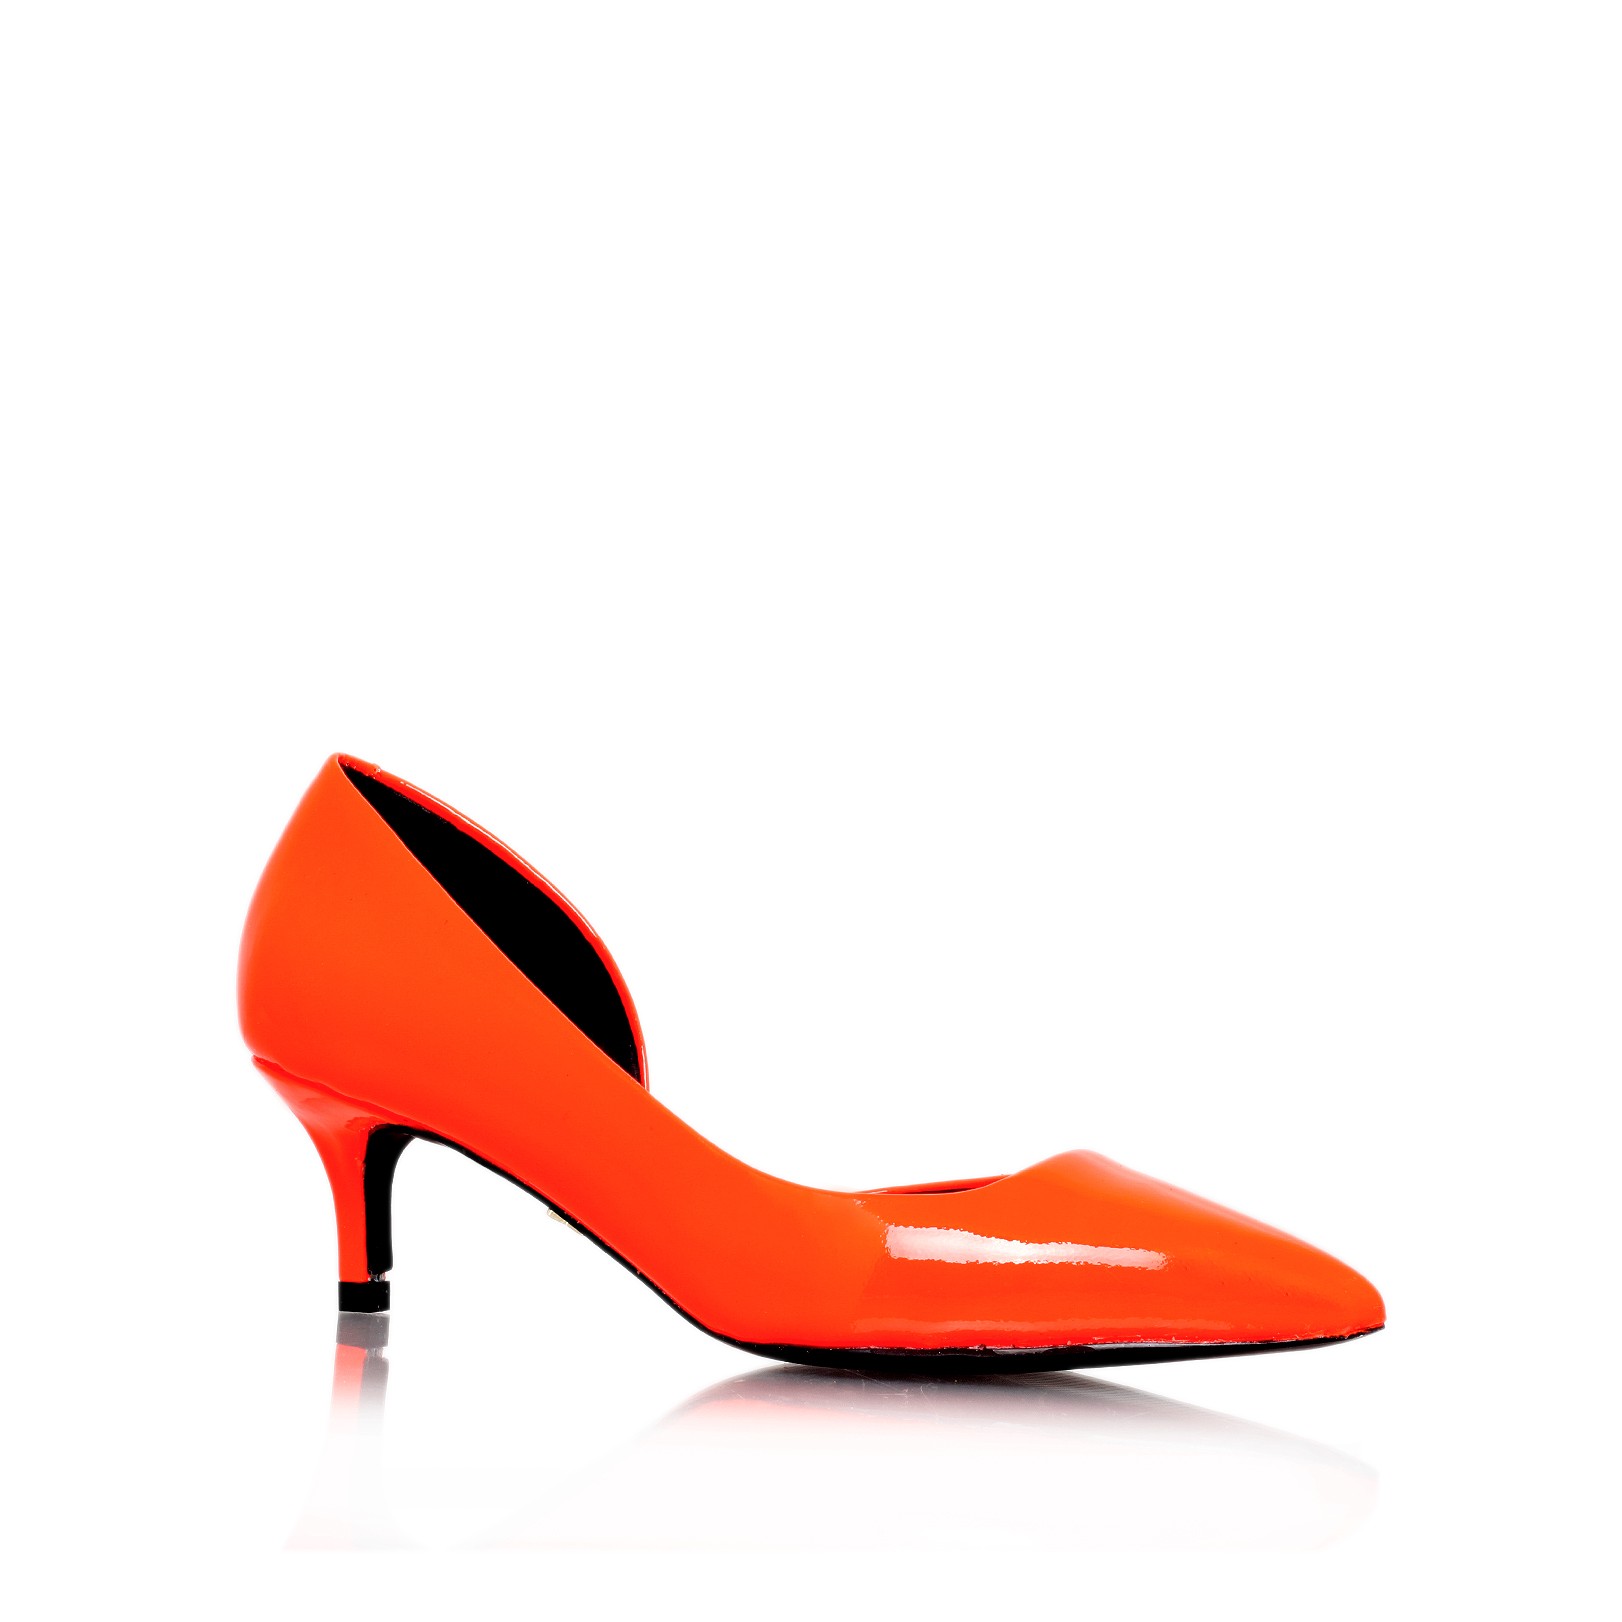 cara, orange shoe by kg kurt geiger - women shoes courts low heel 